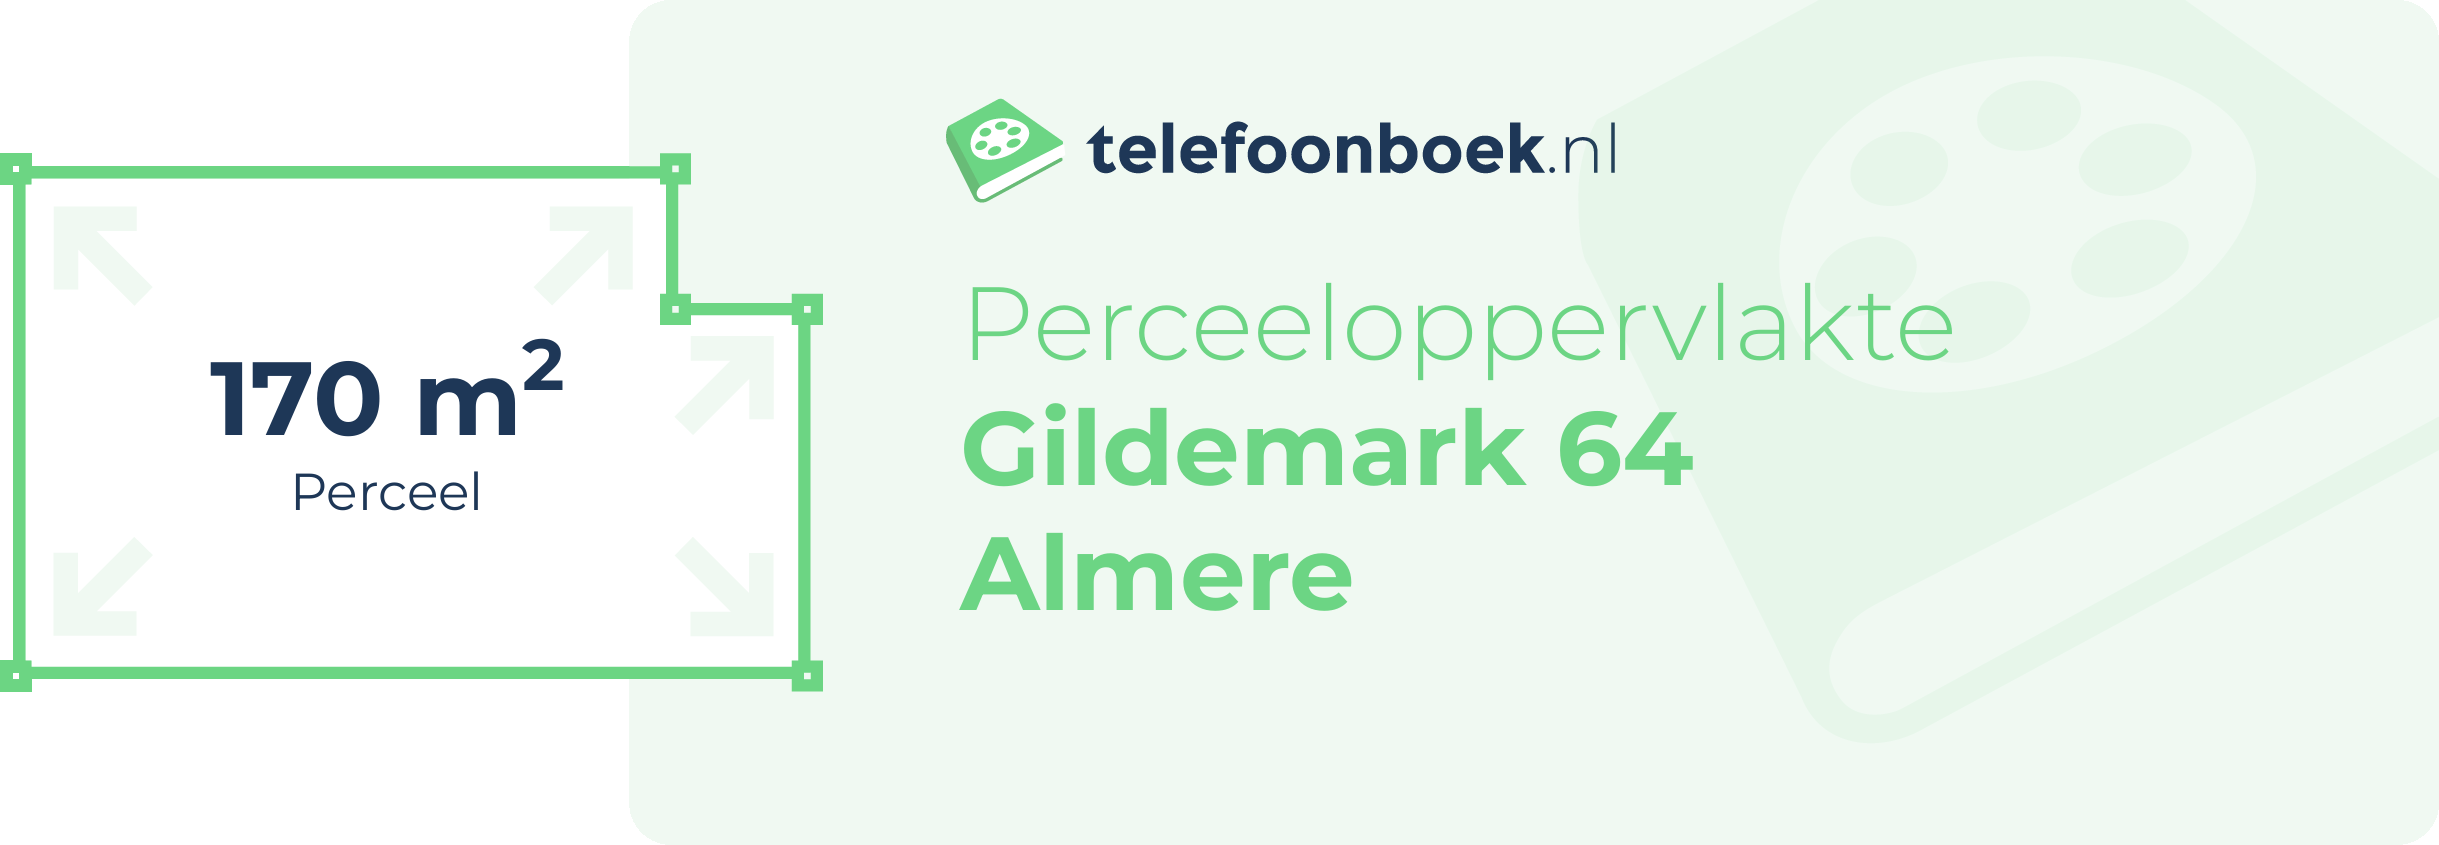 Perceeloppervlakte Gildemark 64 Almere